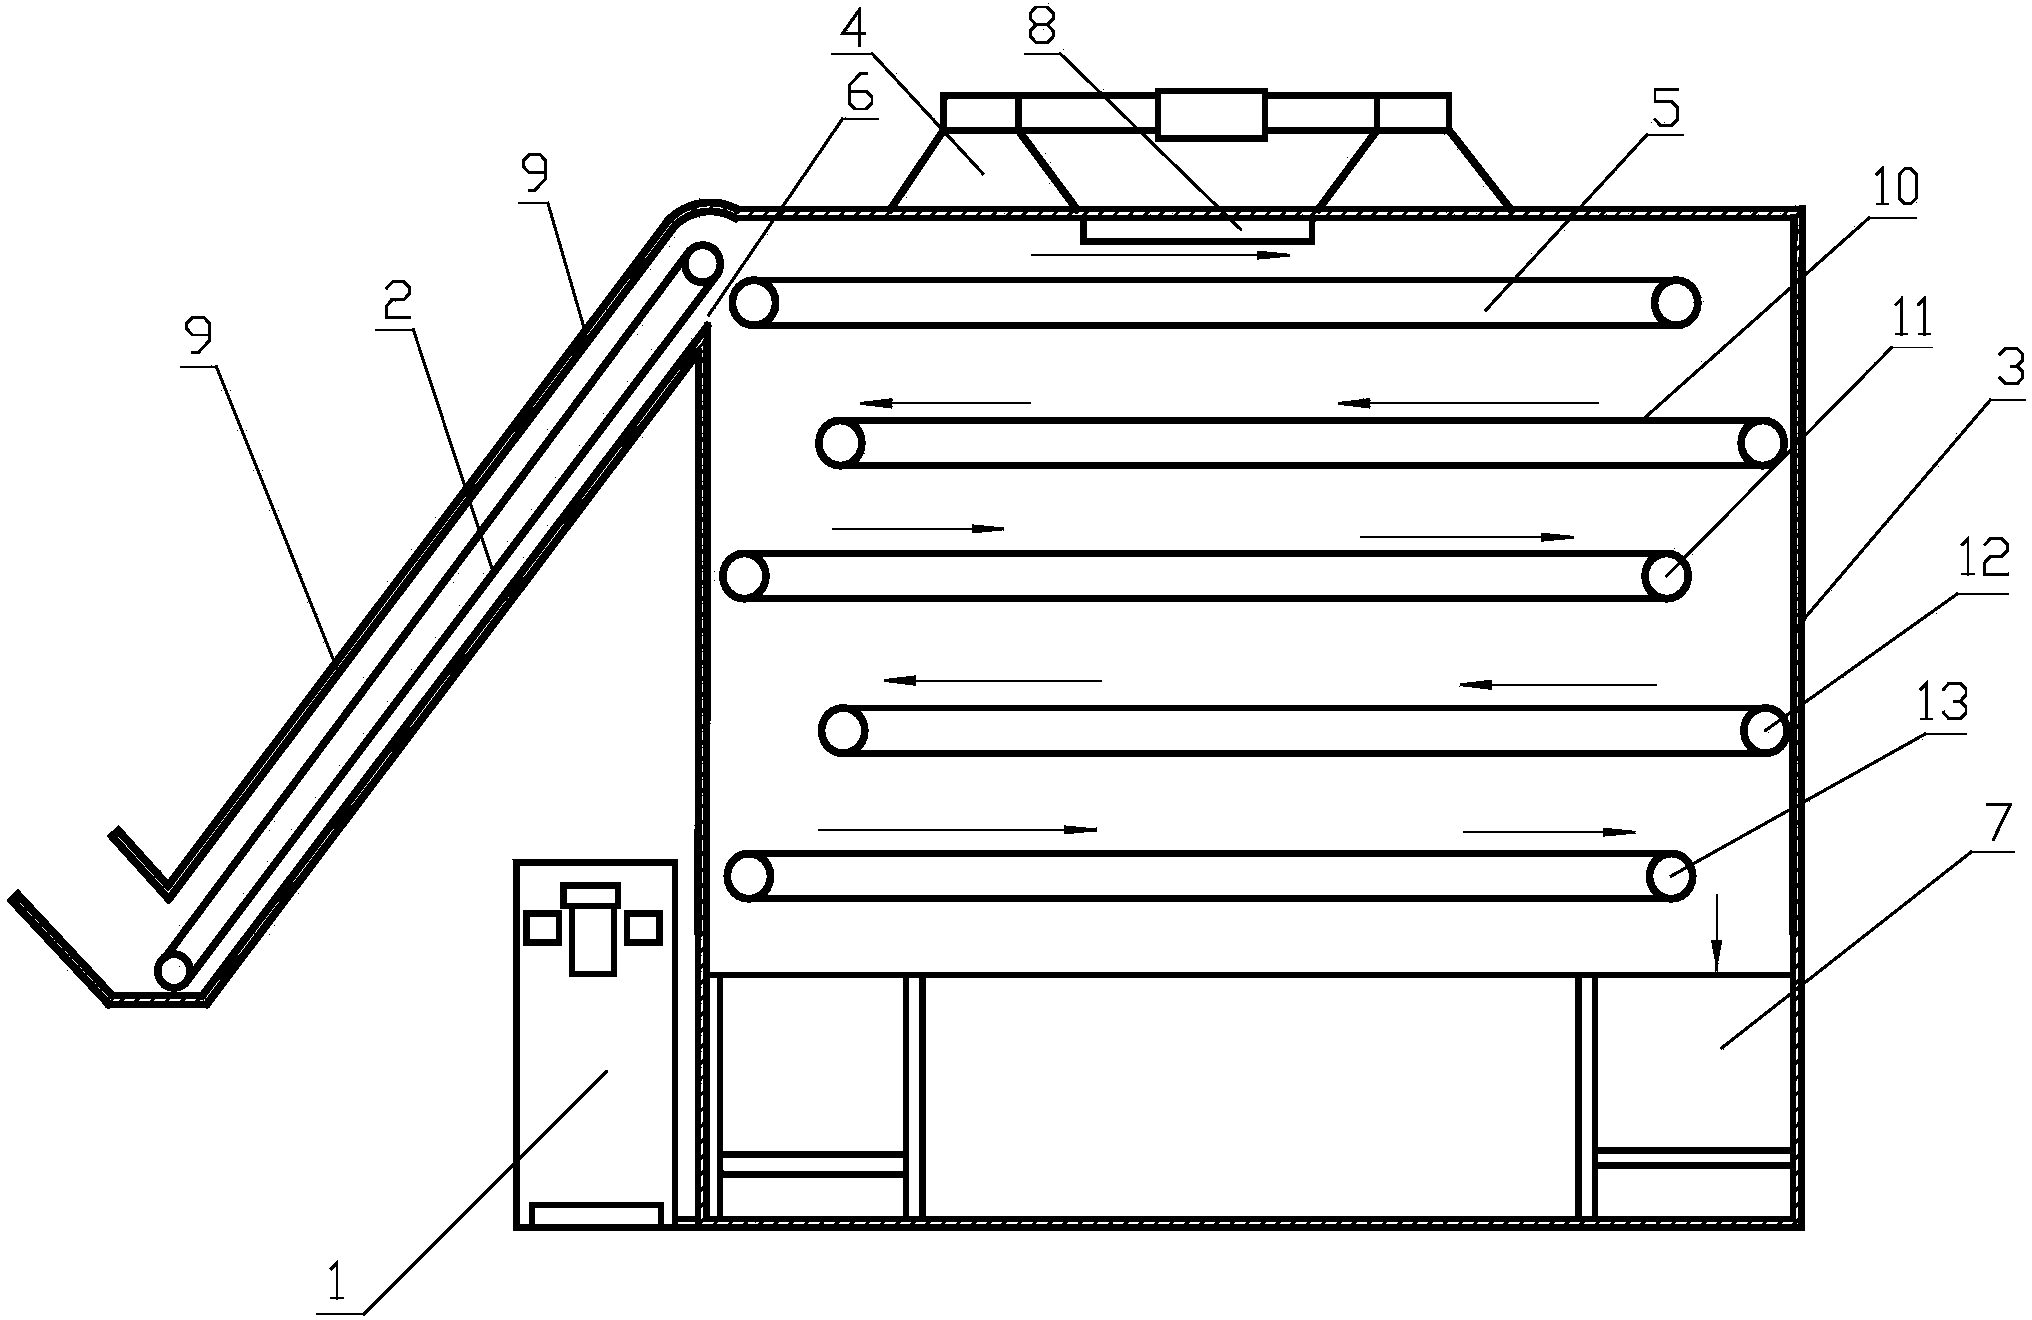 Multi-layer mesh belt type drying device